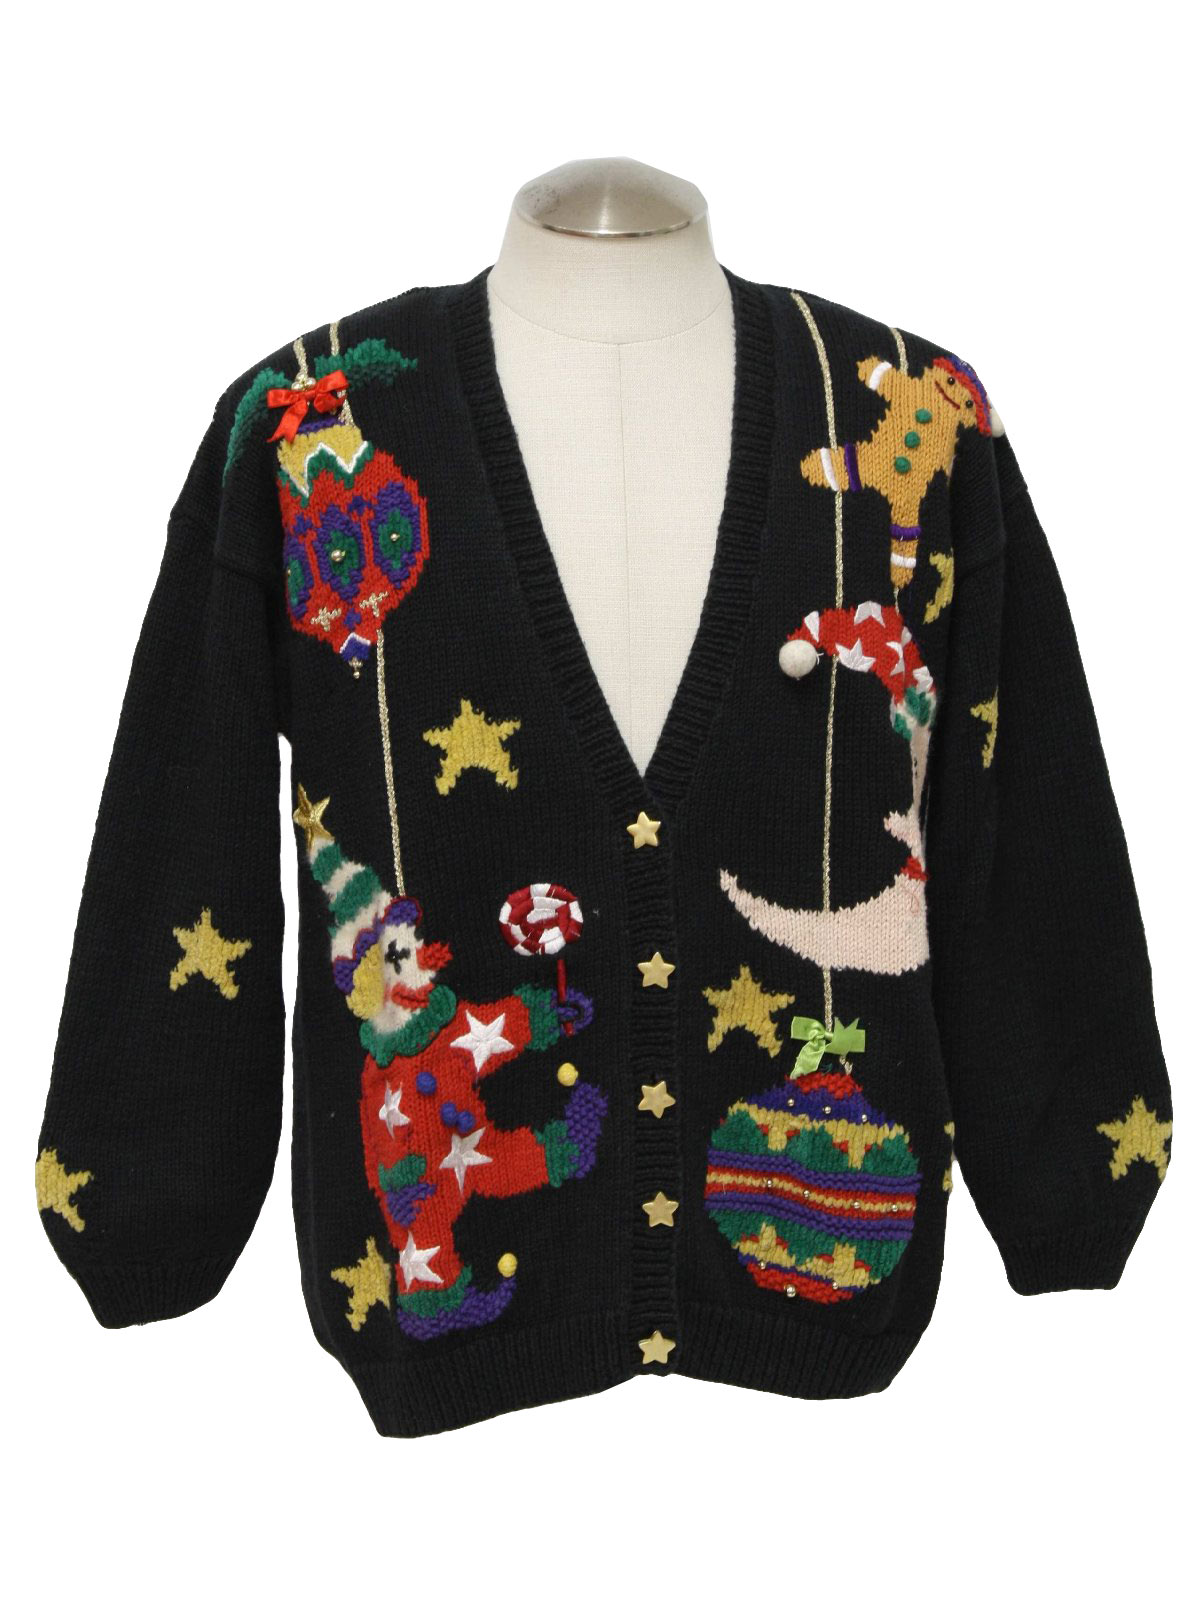 Creepy Clown Ugly Christmas Cardigan Sweater: -Marisa Christina ...